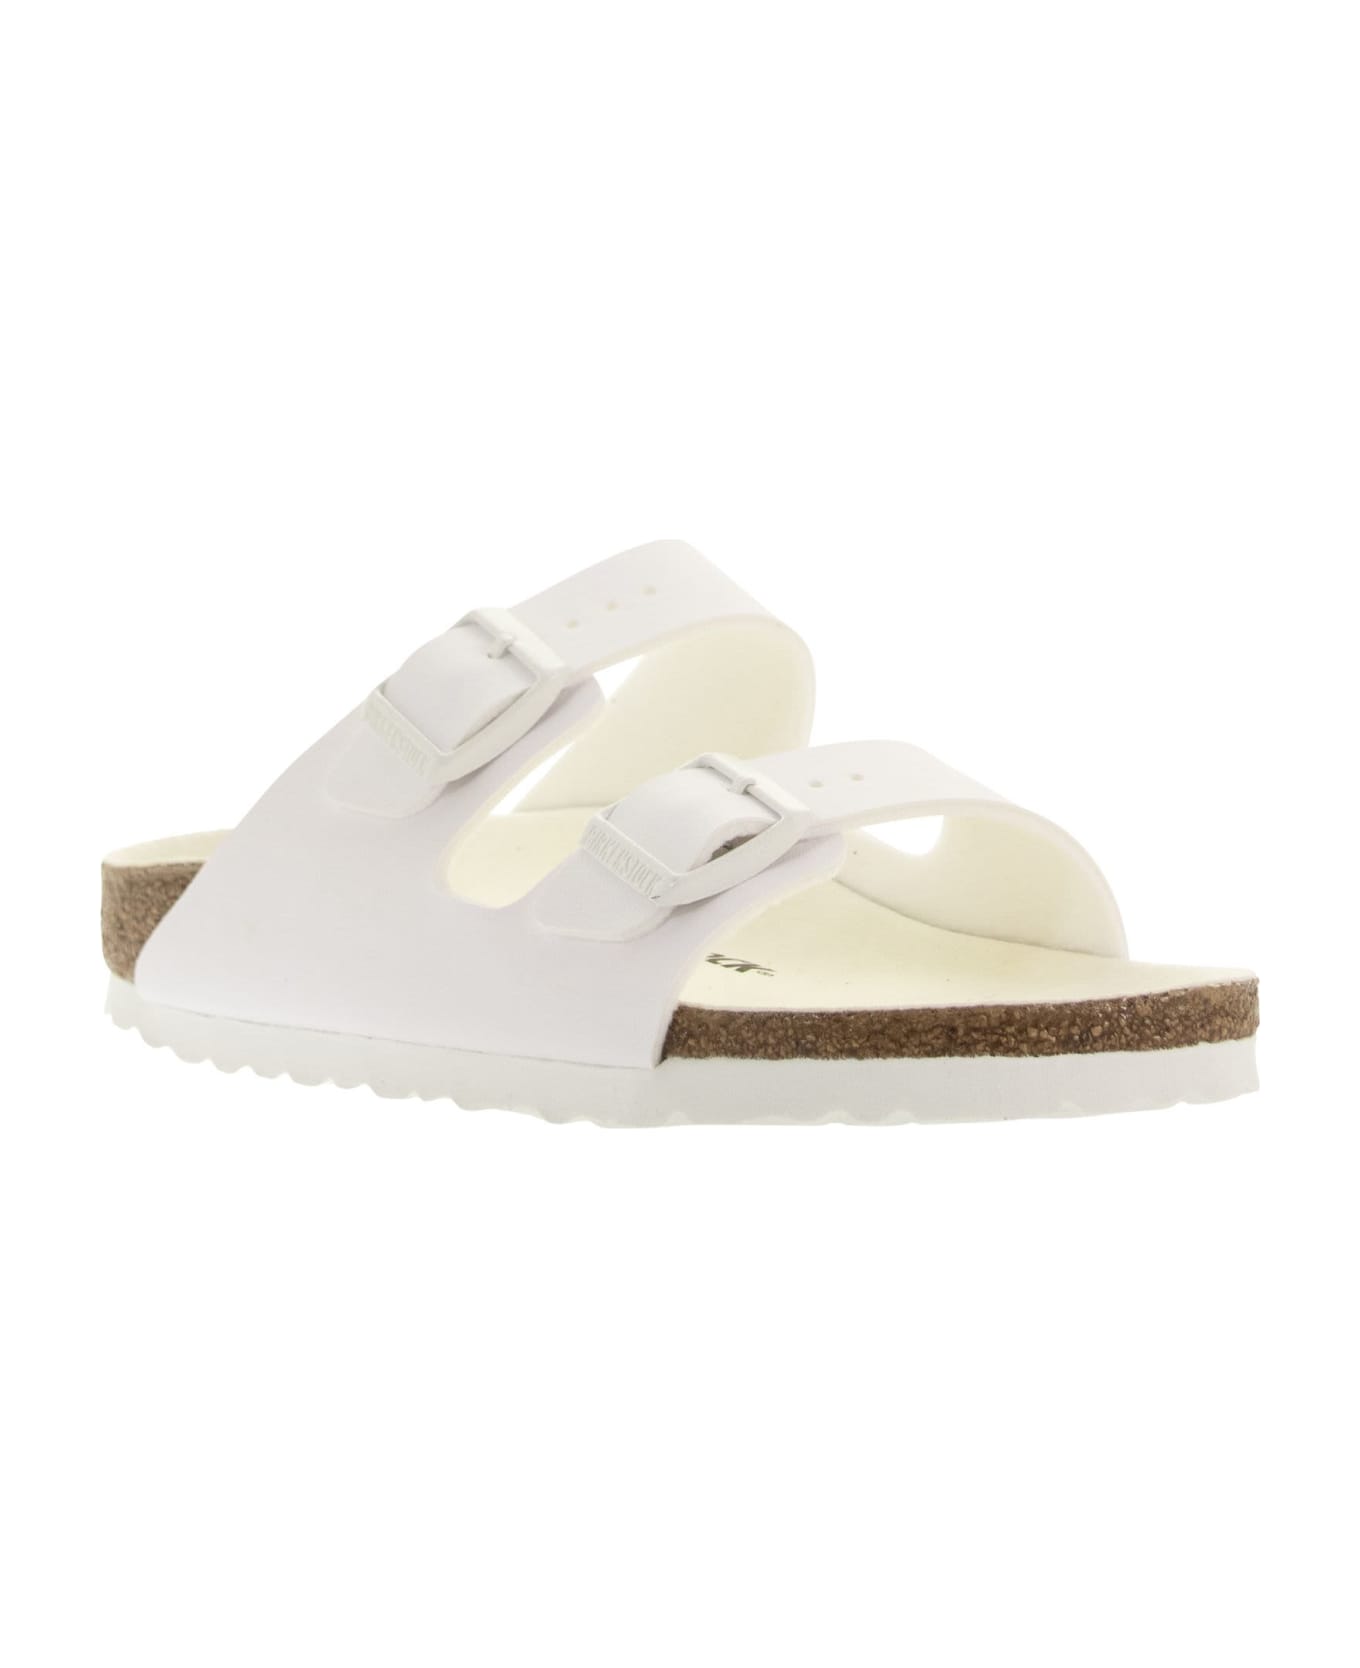 Birkenstock Arizona - Slipper Sandal - Triples white サンダル